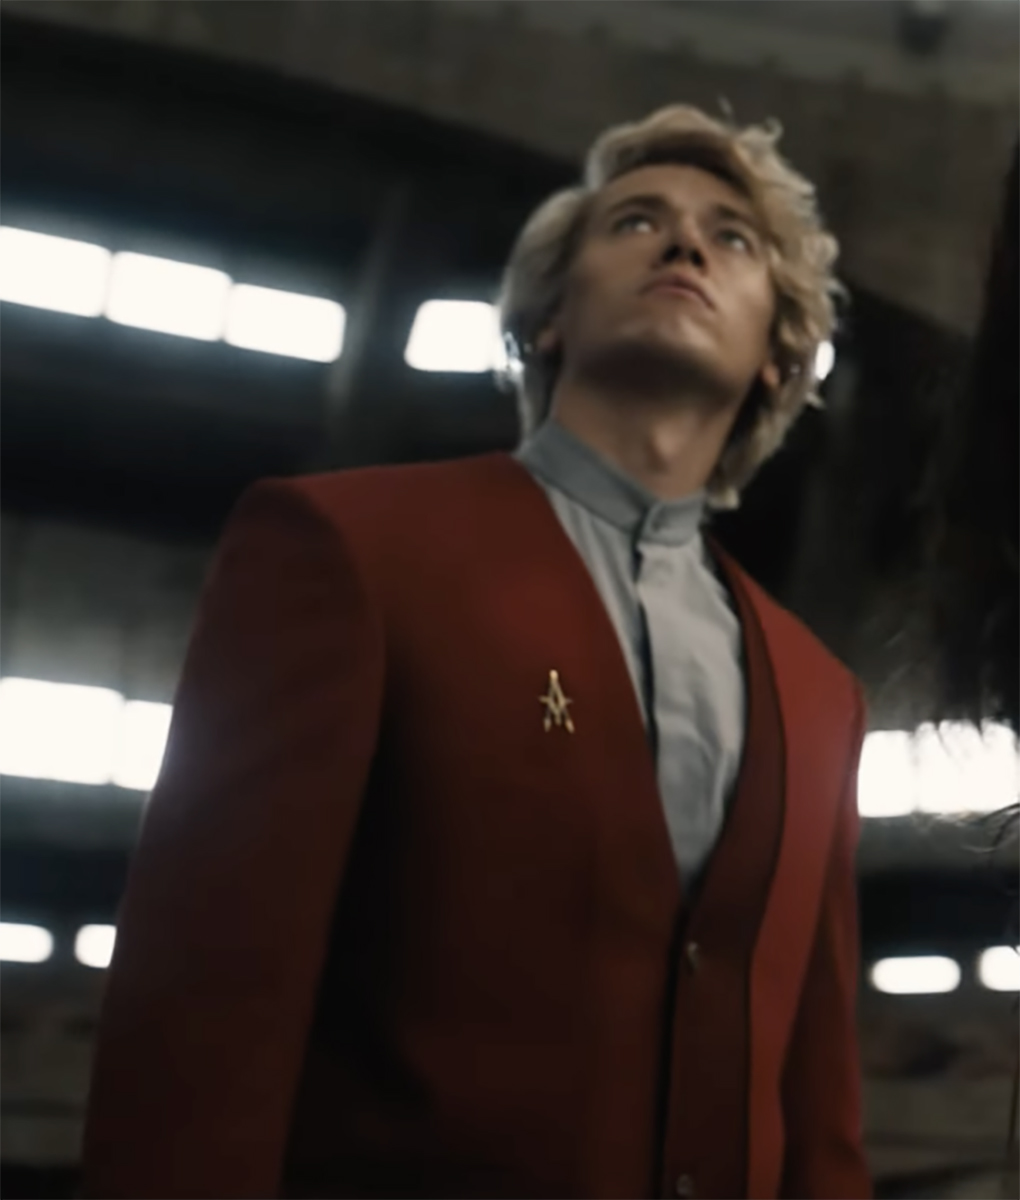 The Hunger Games 5 Coriolanus Snow Red Blazer